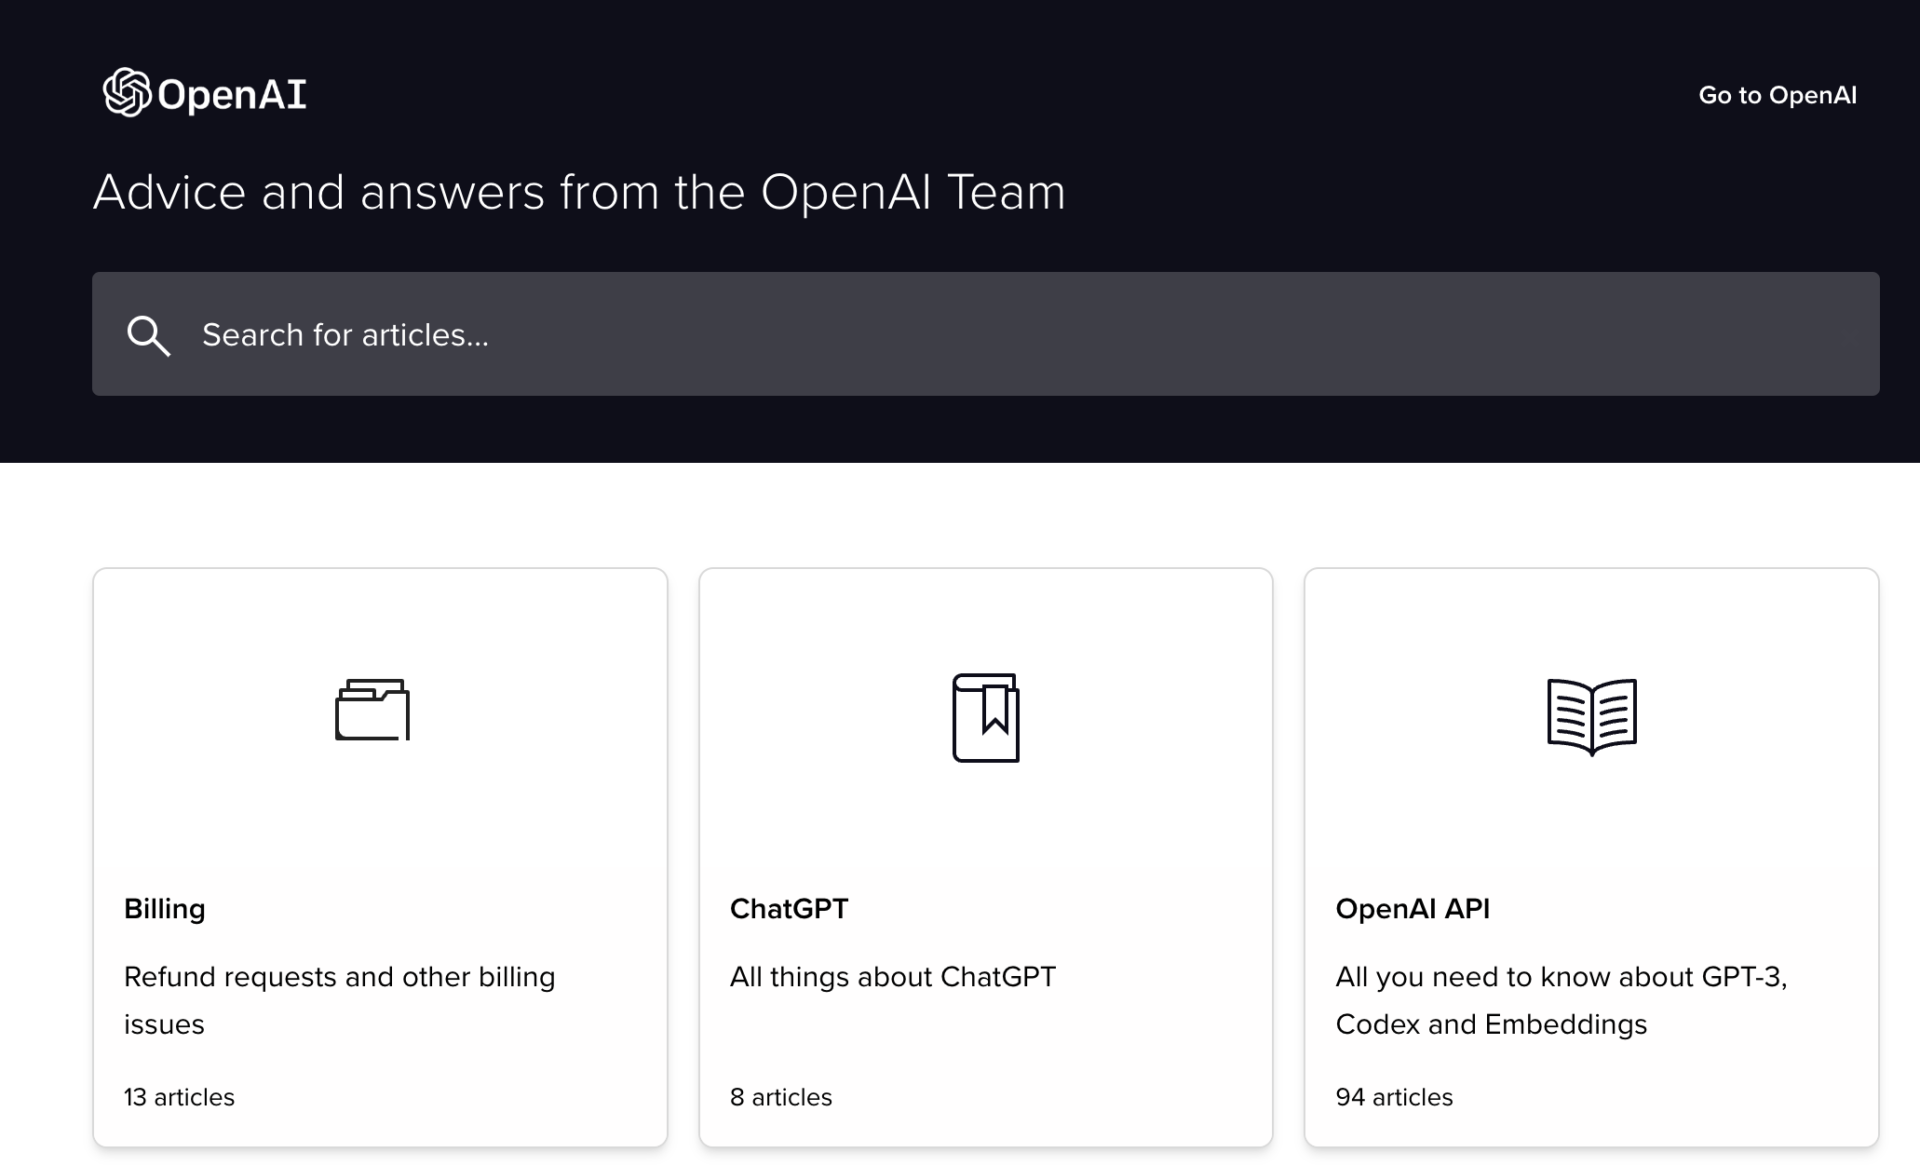 OpenAI Customer Support